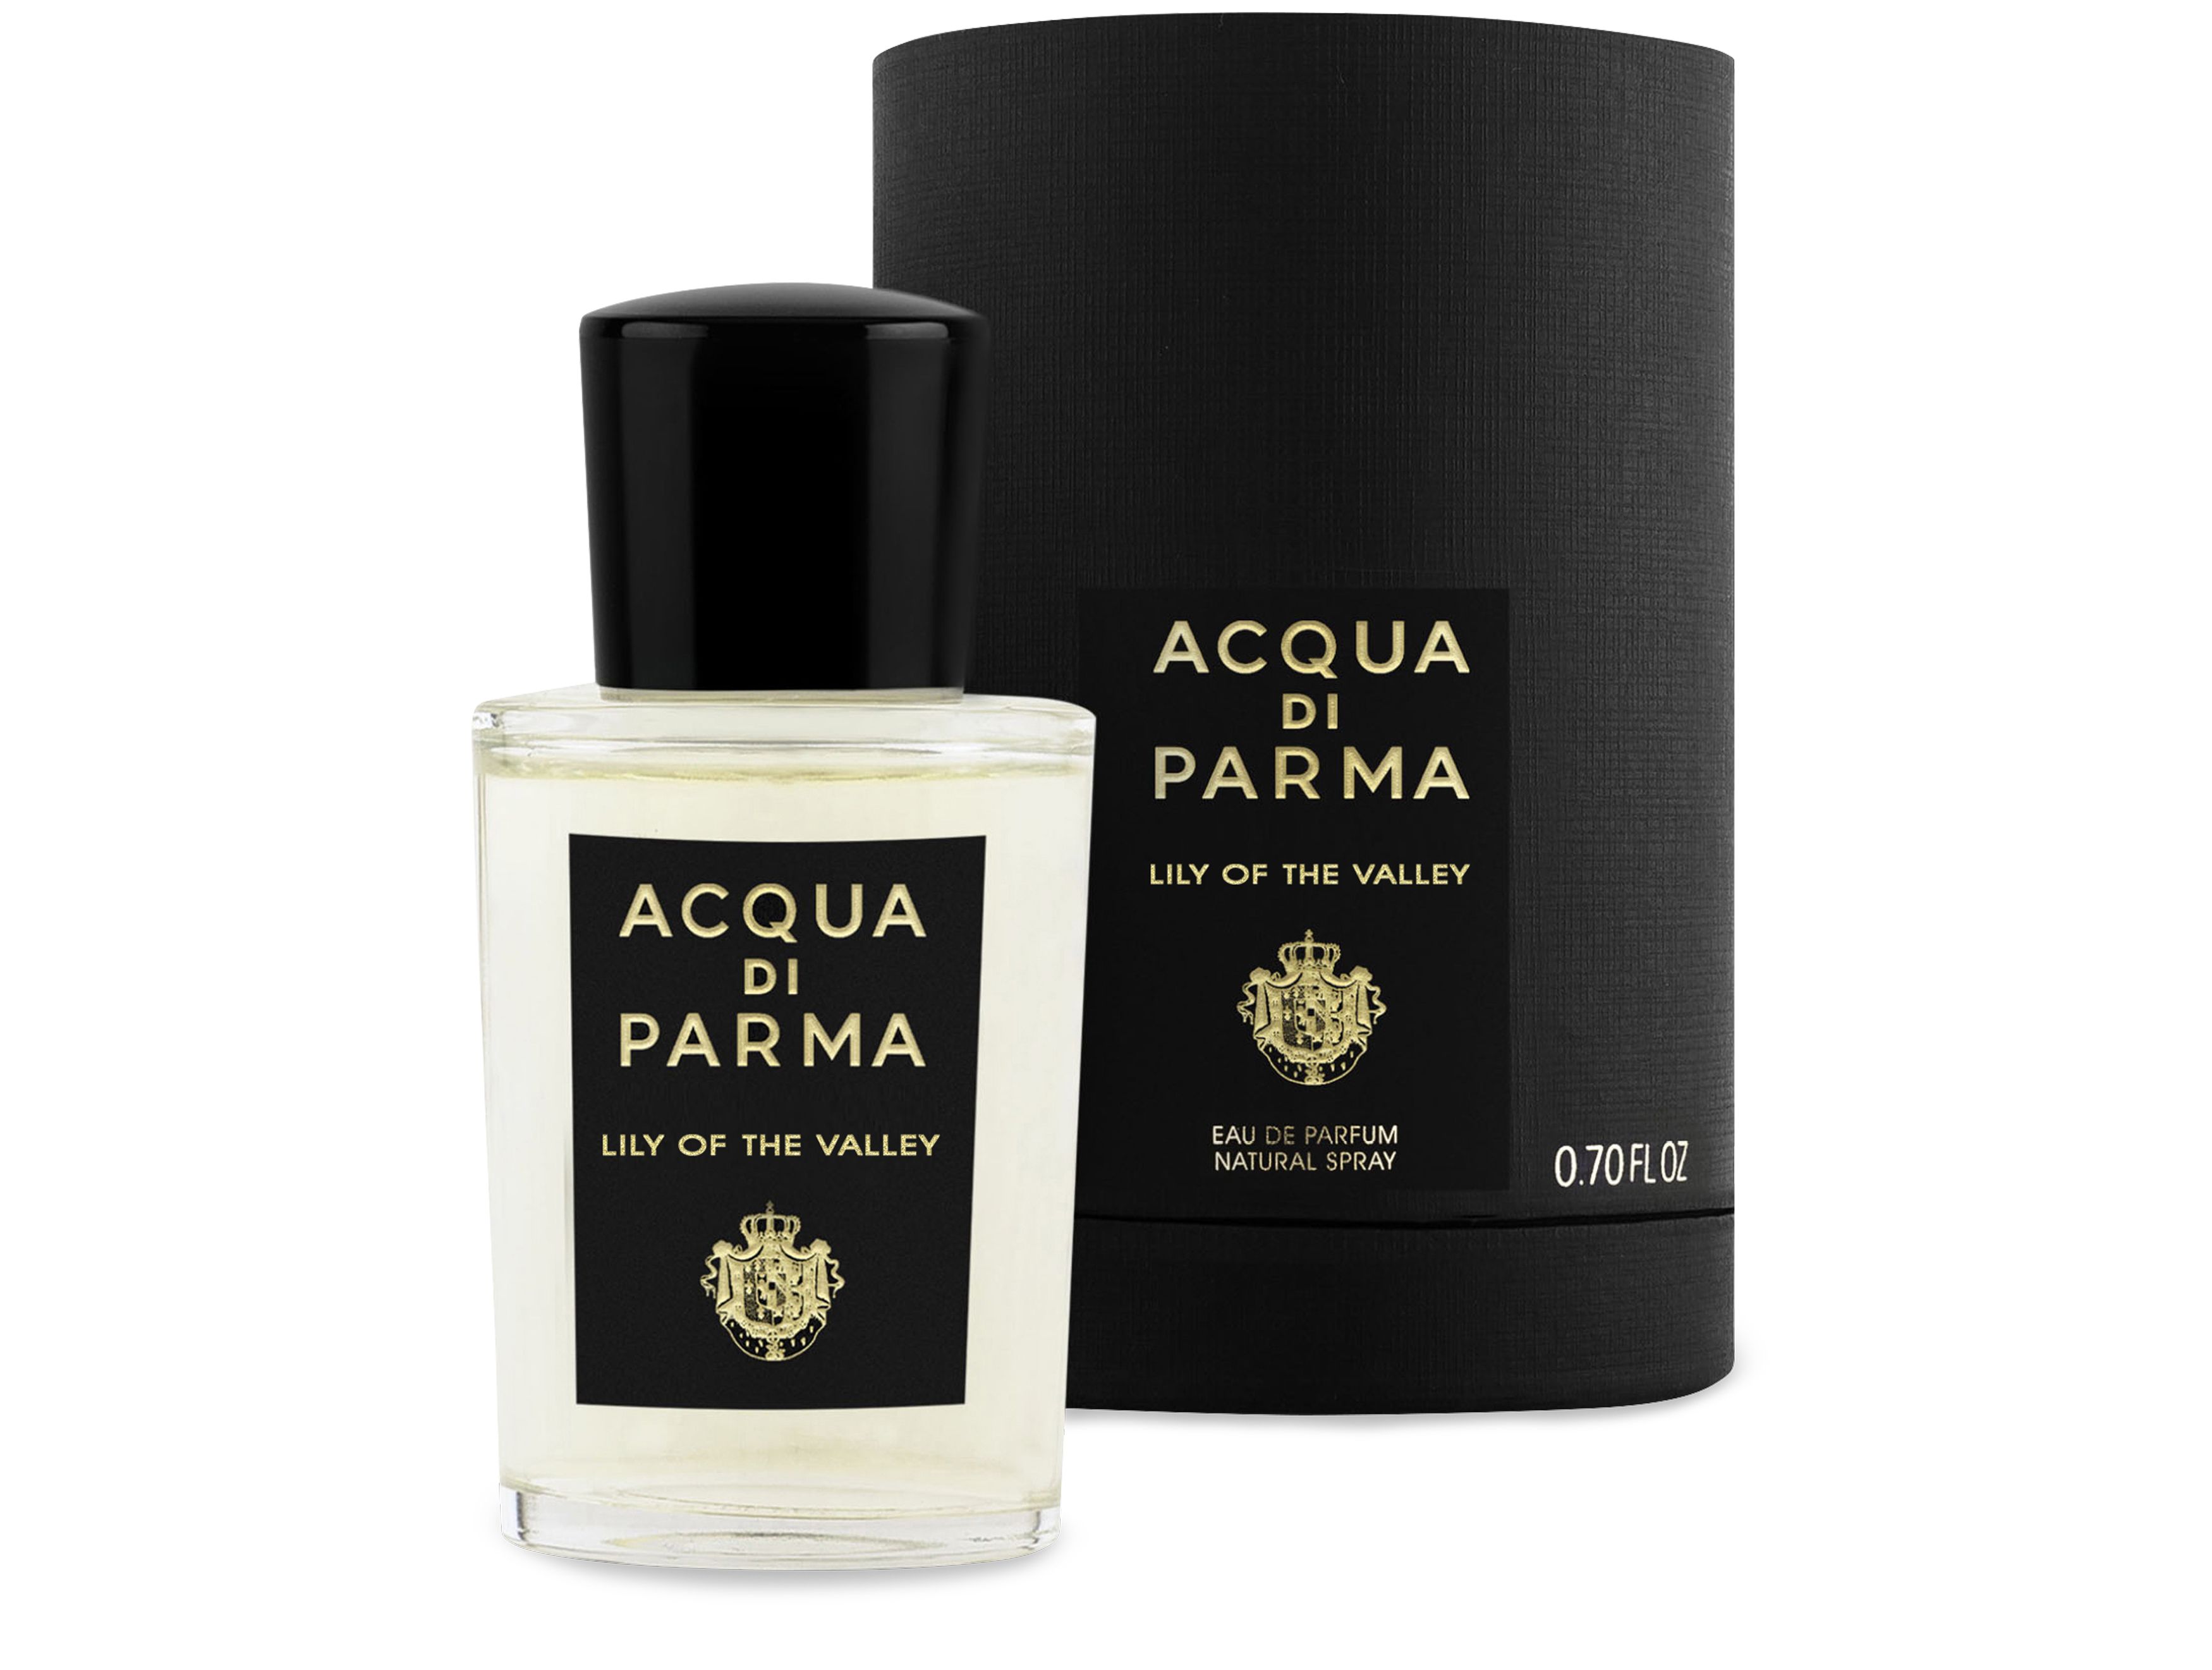 Acqua Di Parma Lily of the Valley Eau de Parfum 20ml